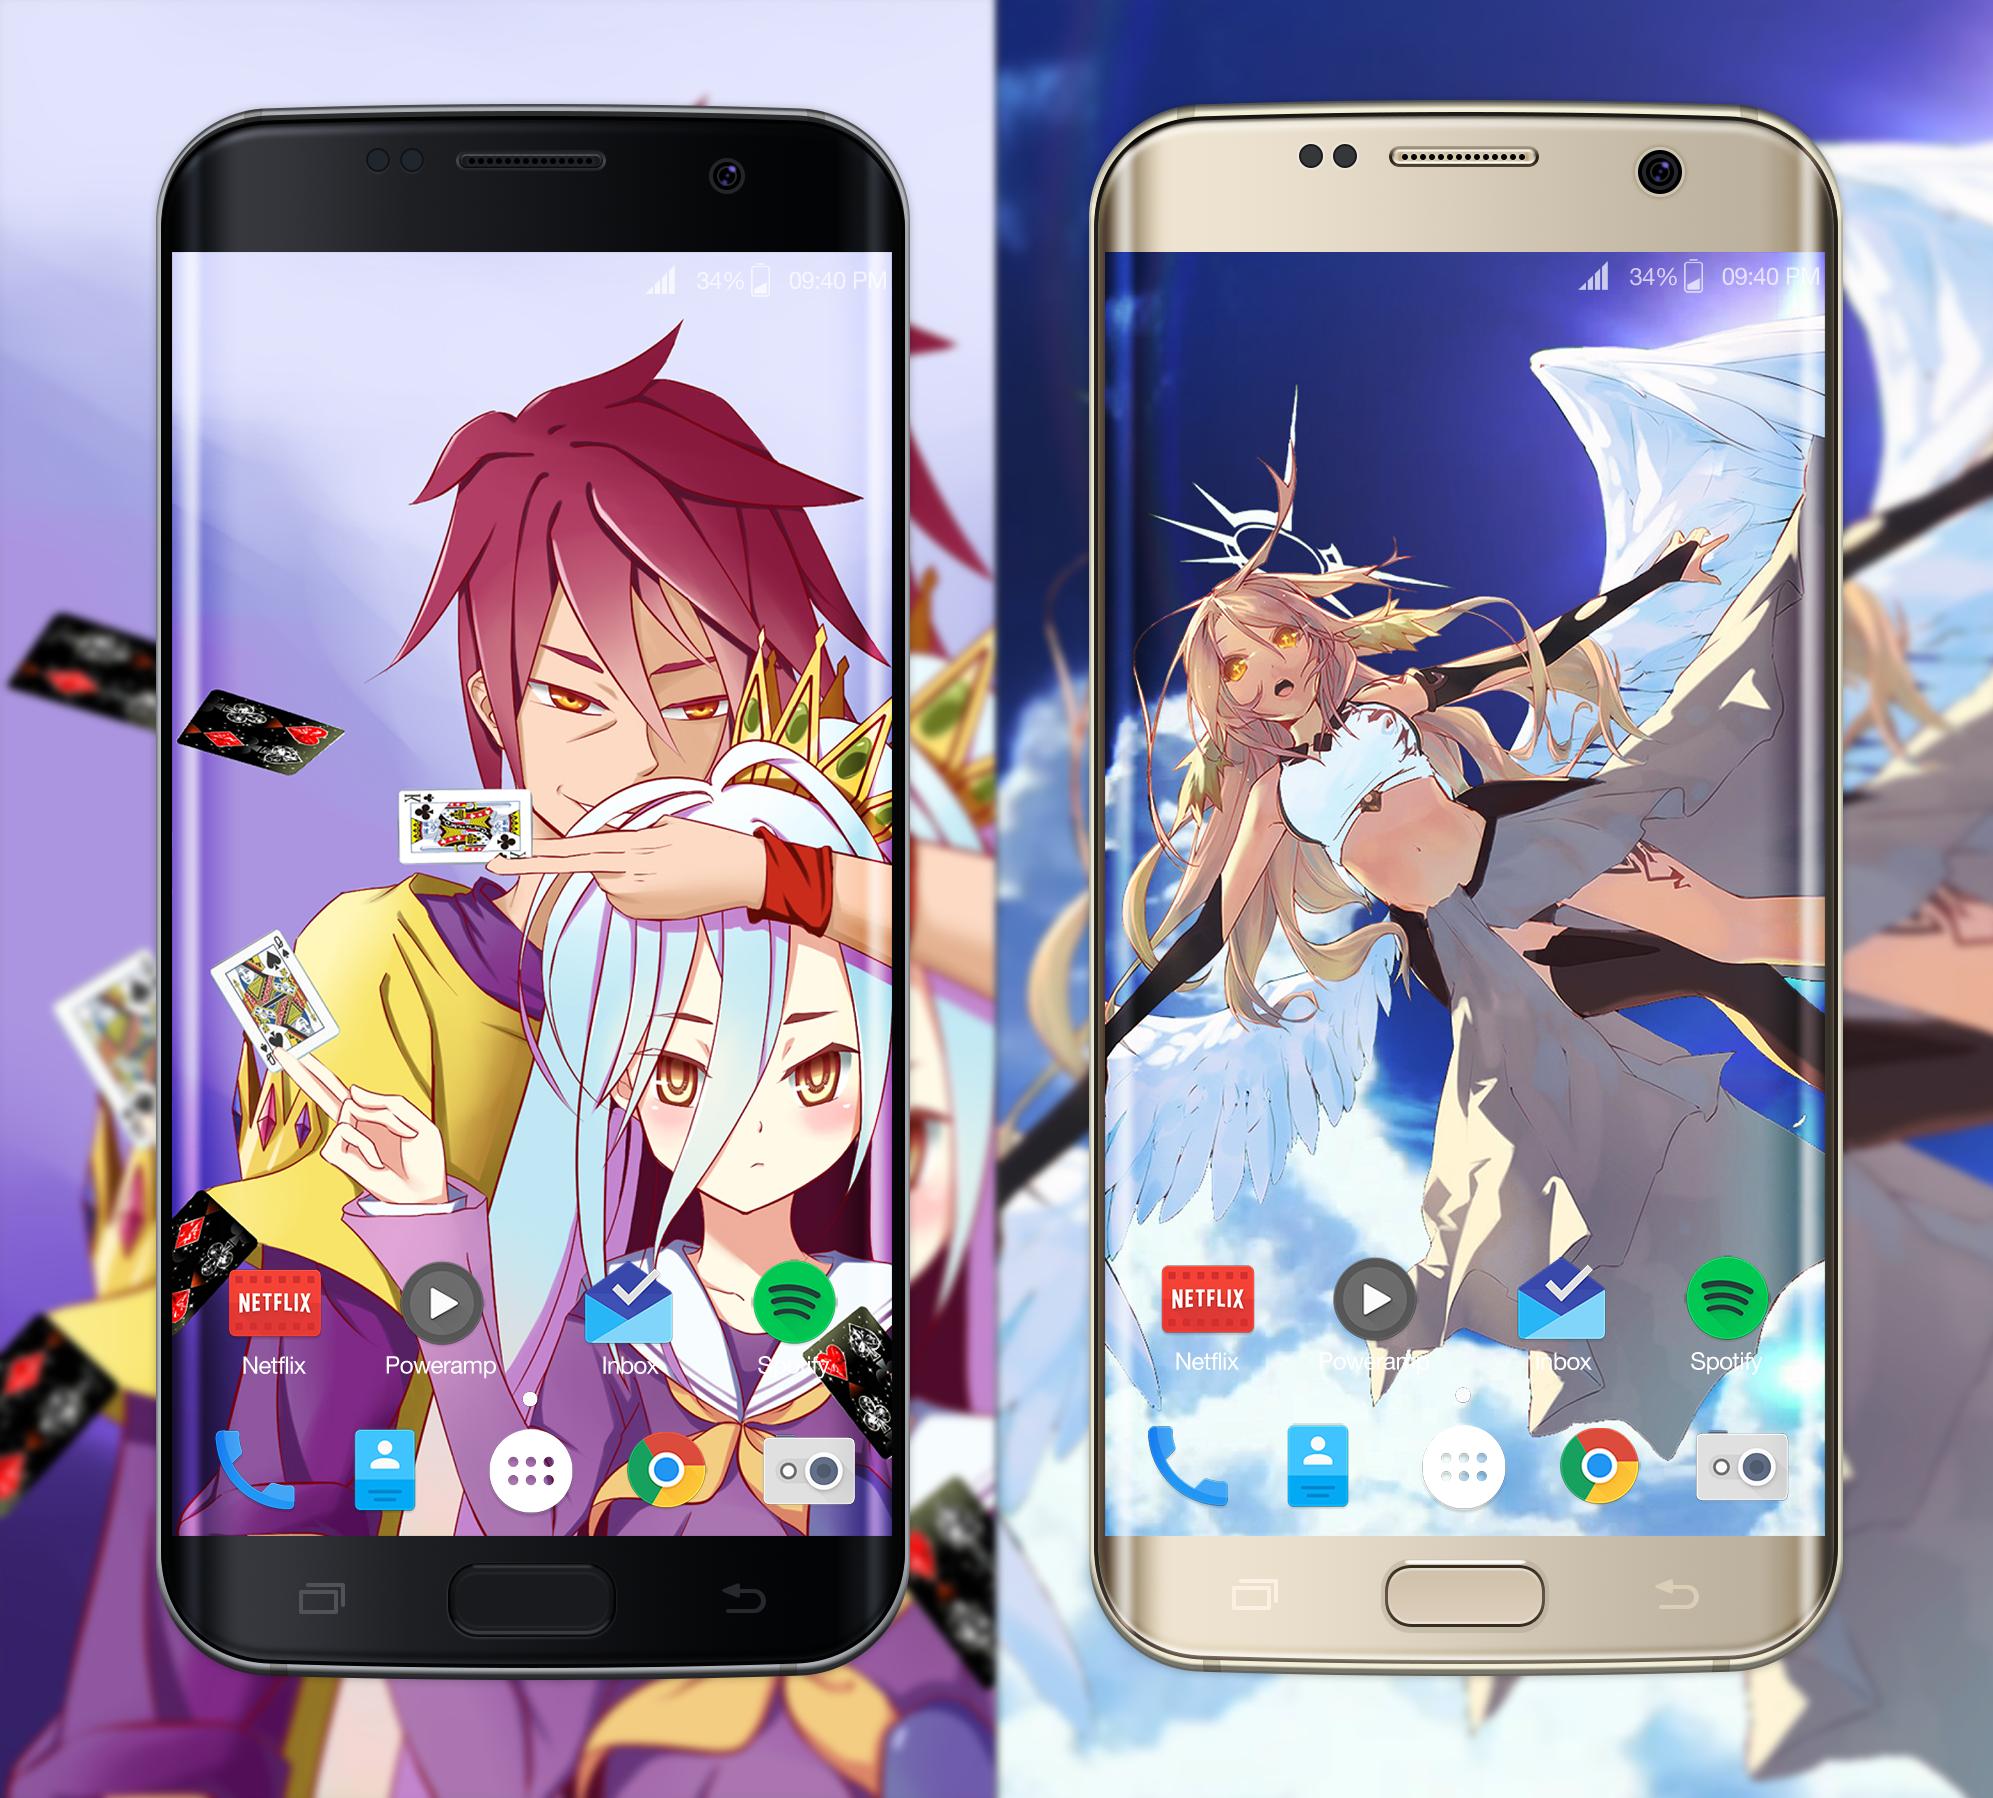 Shiro Anime Wallpaper For Android Apk Download - no game no life shiro roblox